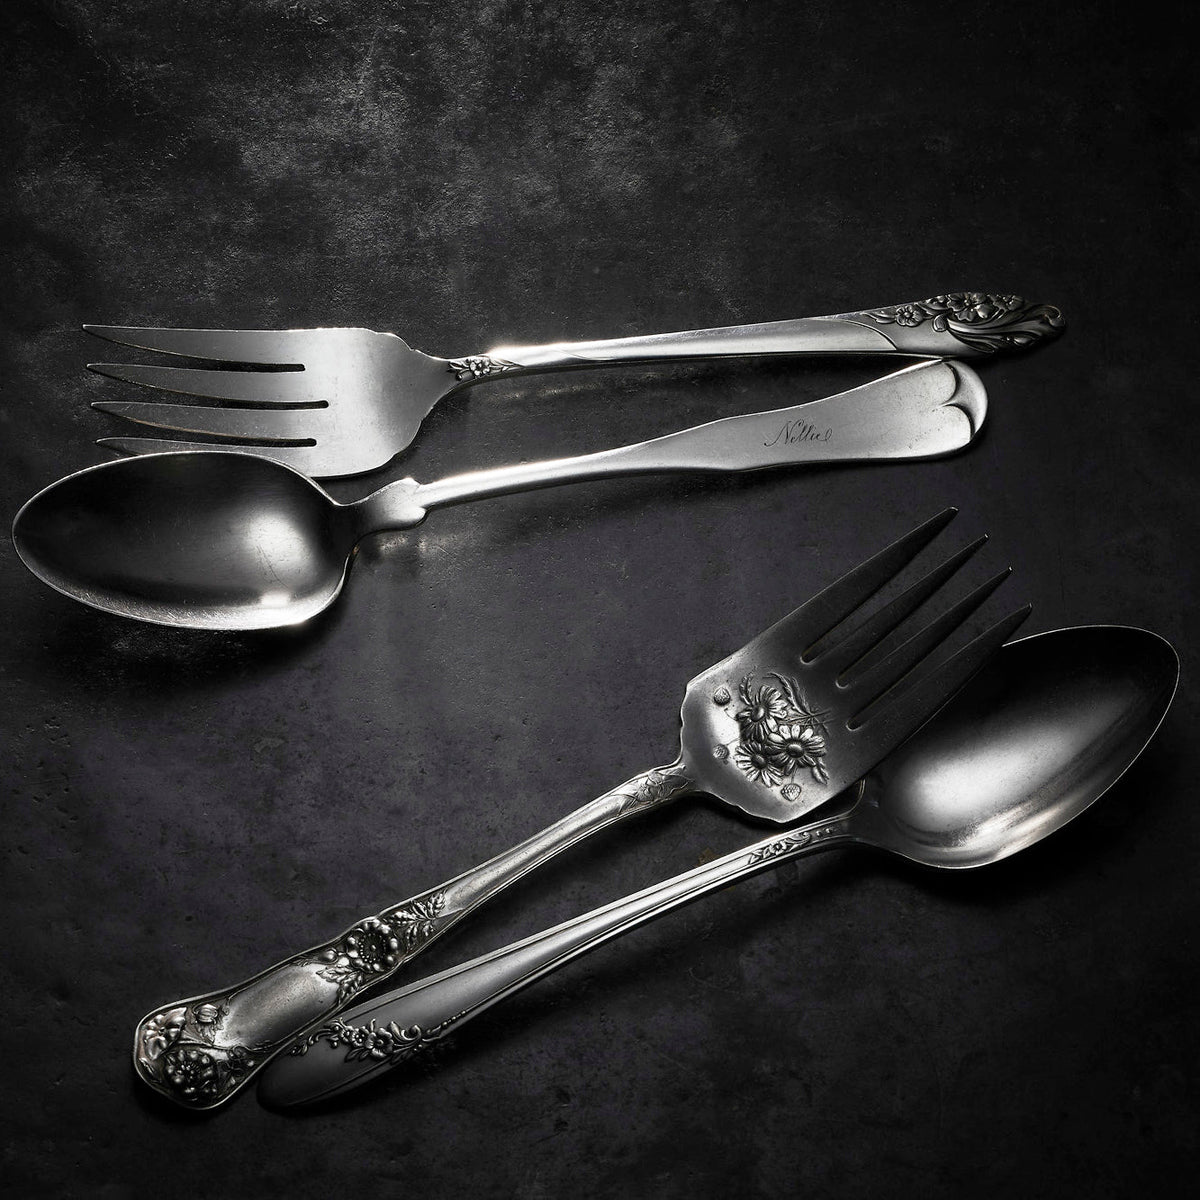 Caskata Brimfield Vintage Serving Set spoon and fork on a black surface.